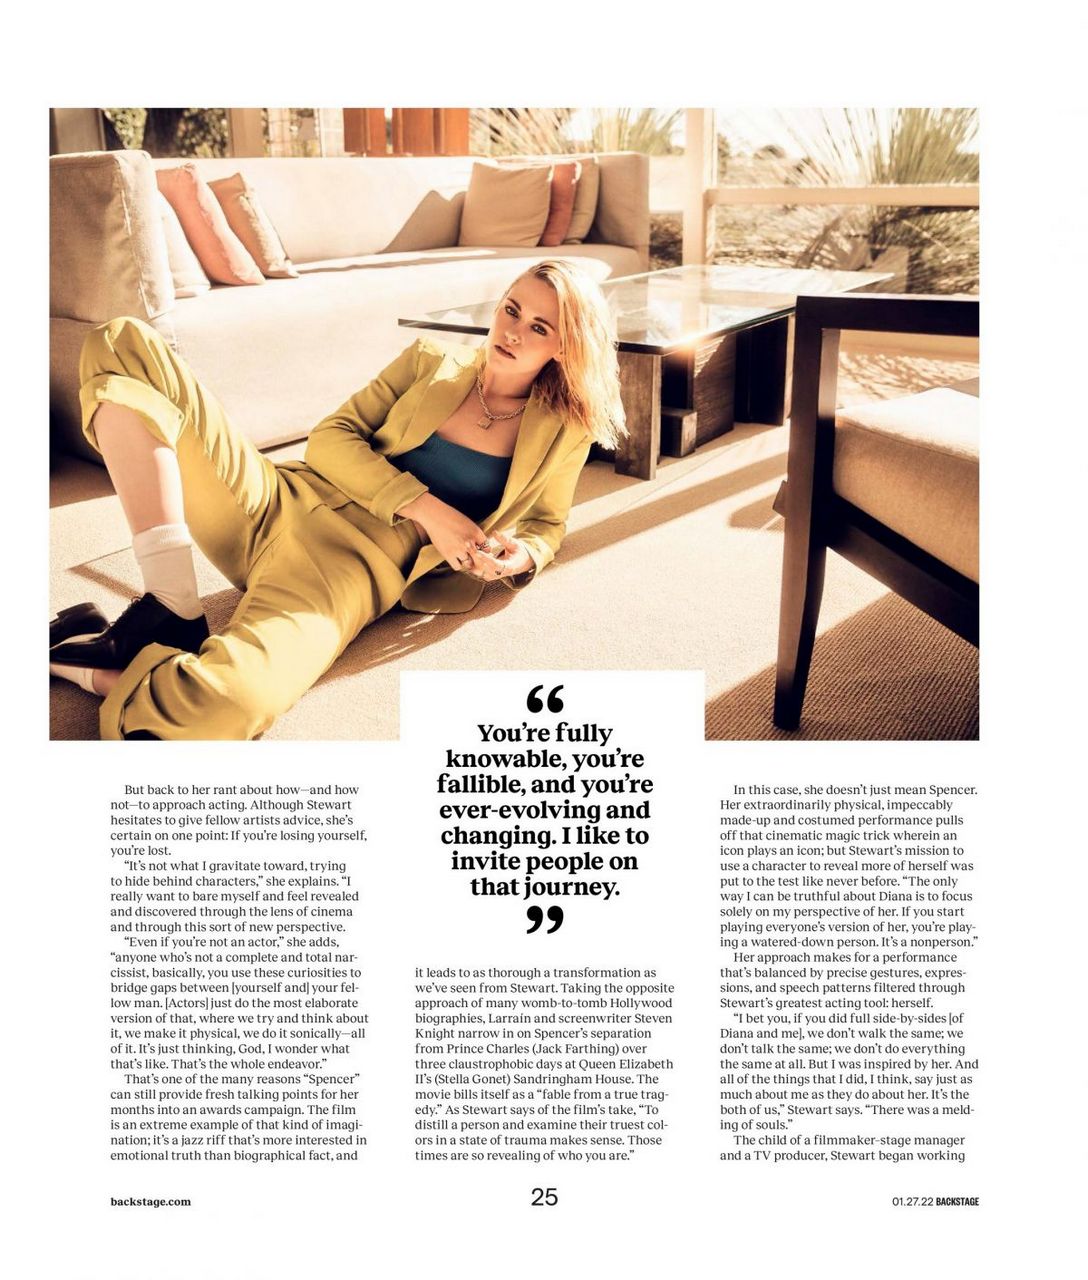 Kristen Stewart Backstage Magazine January